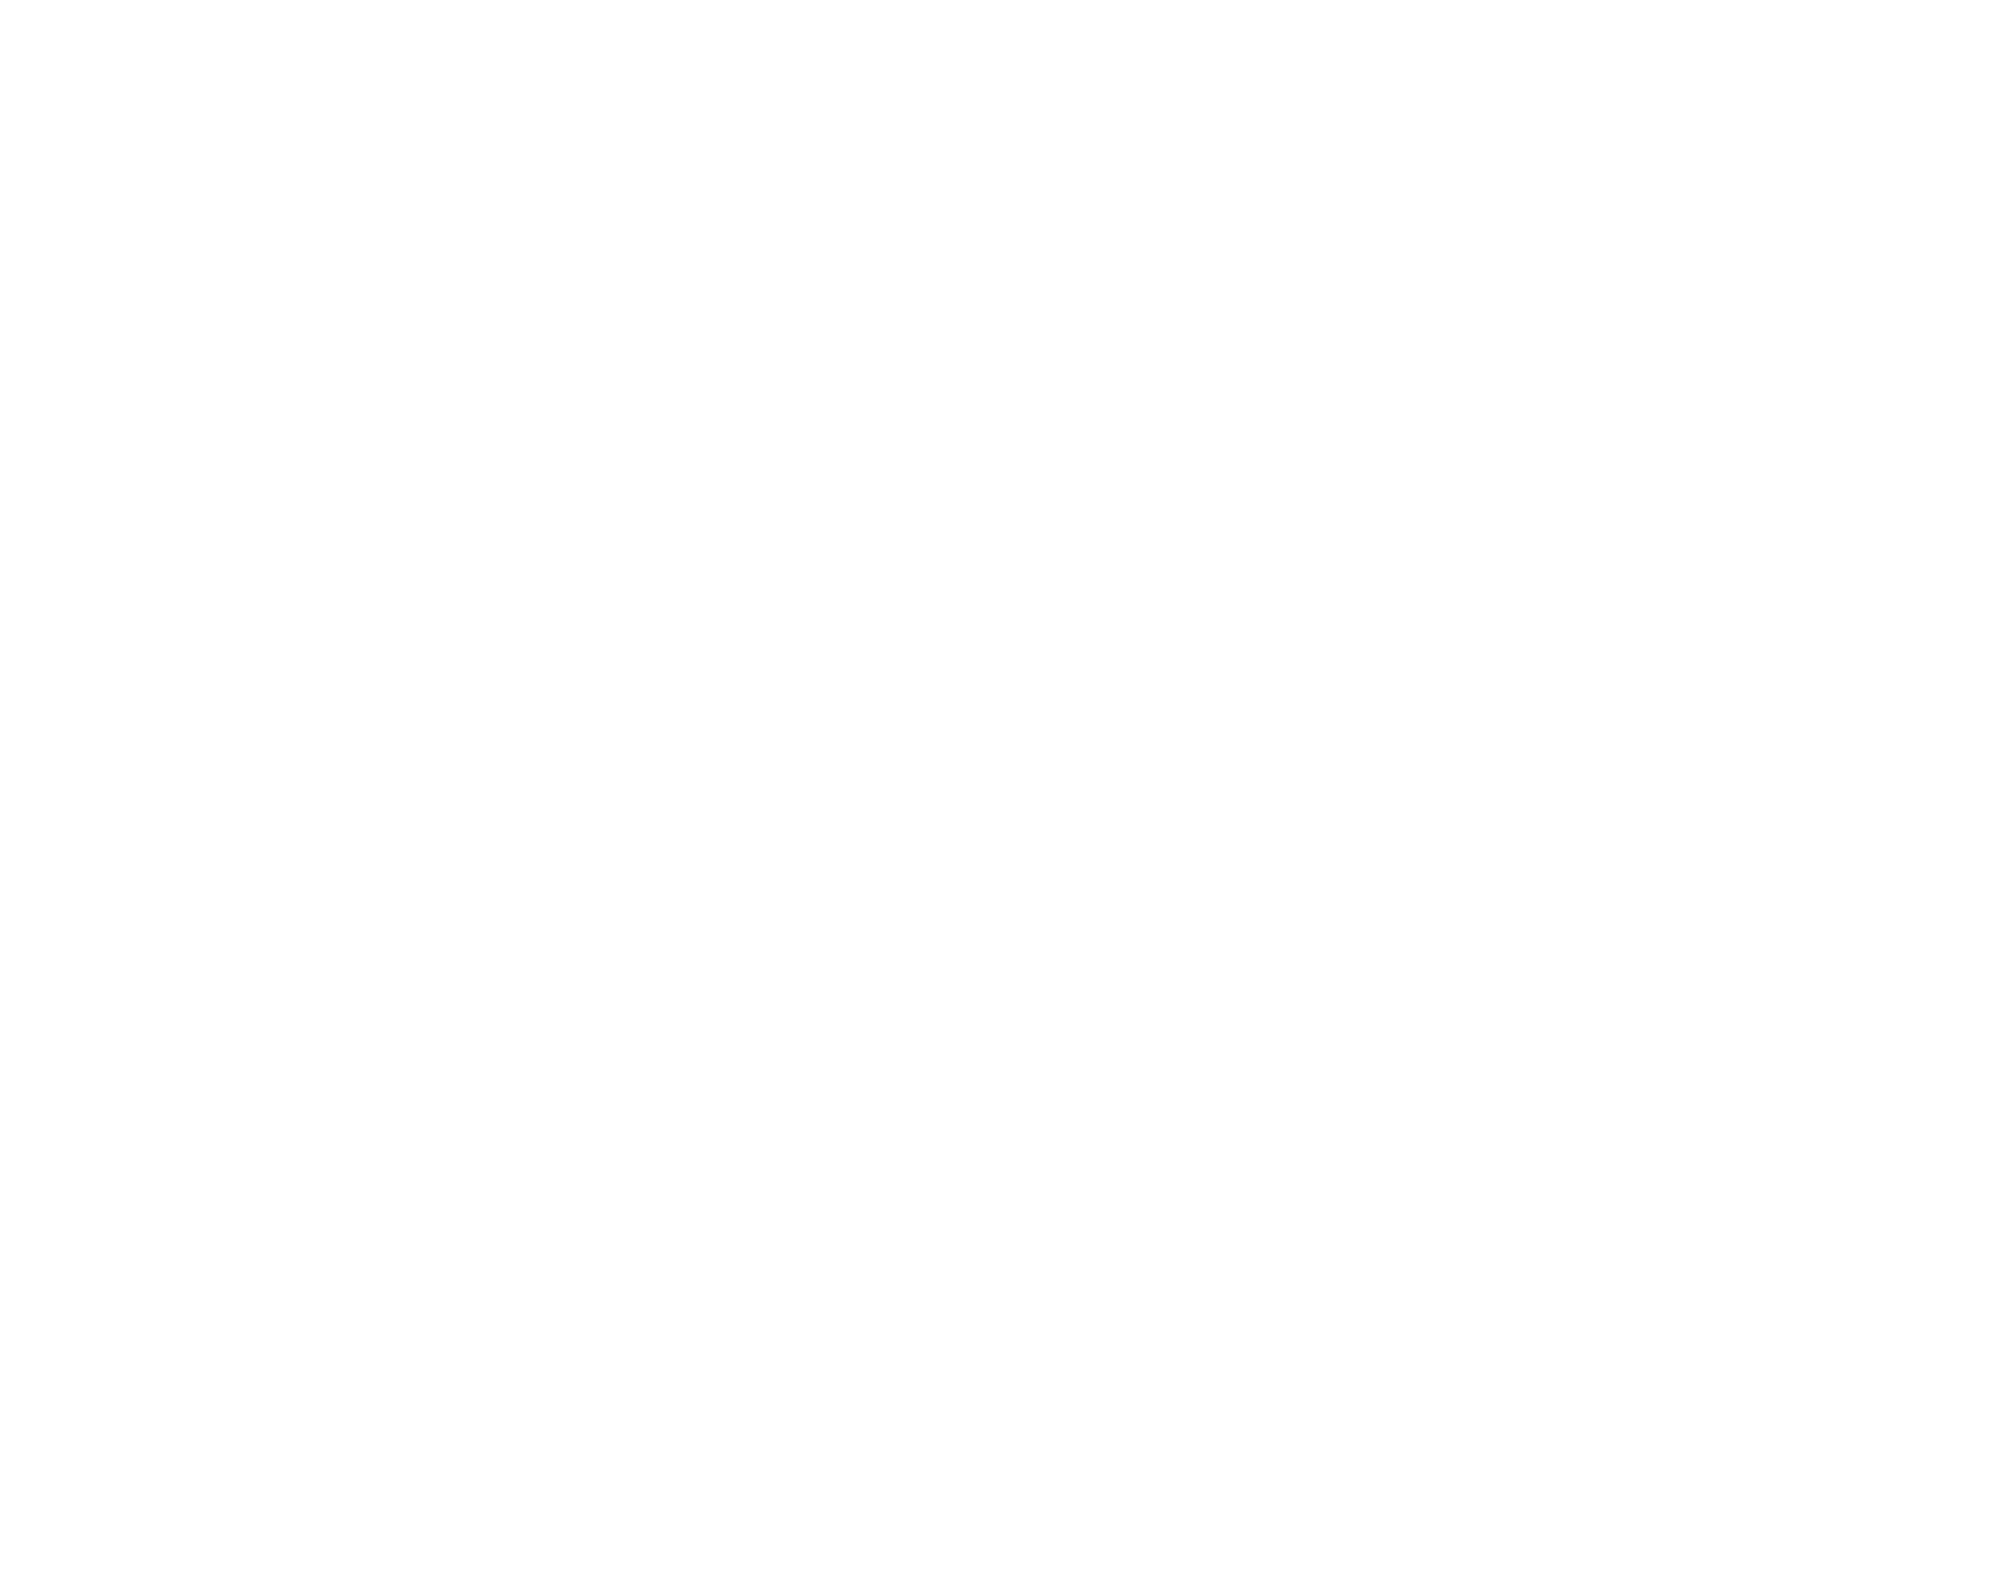 Top 26 Markets for Performance Plastics